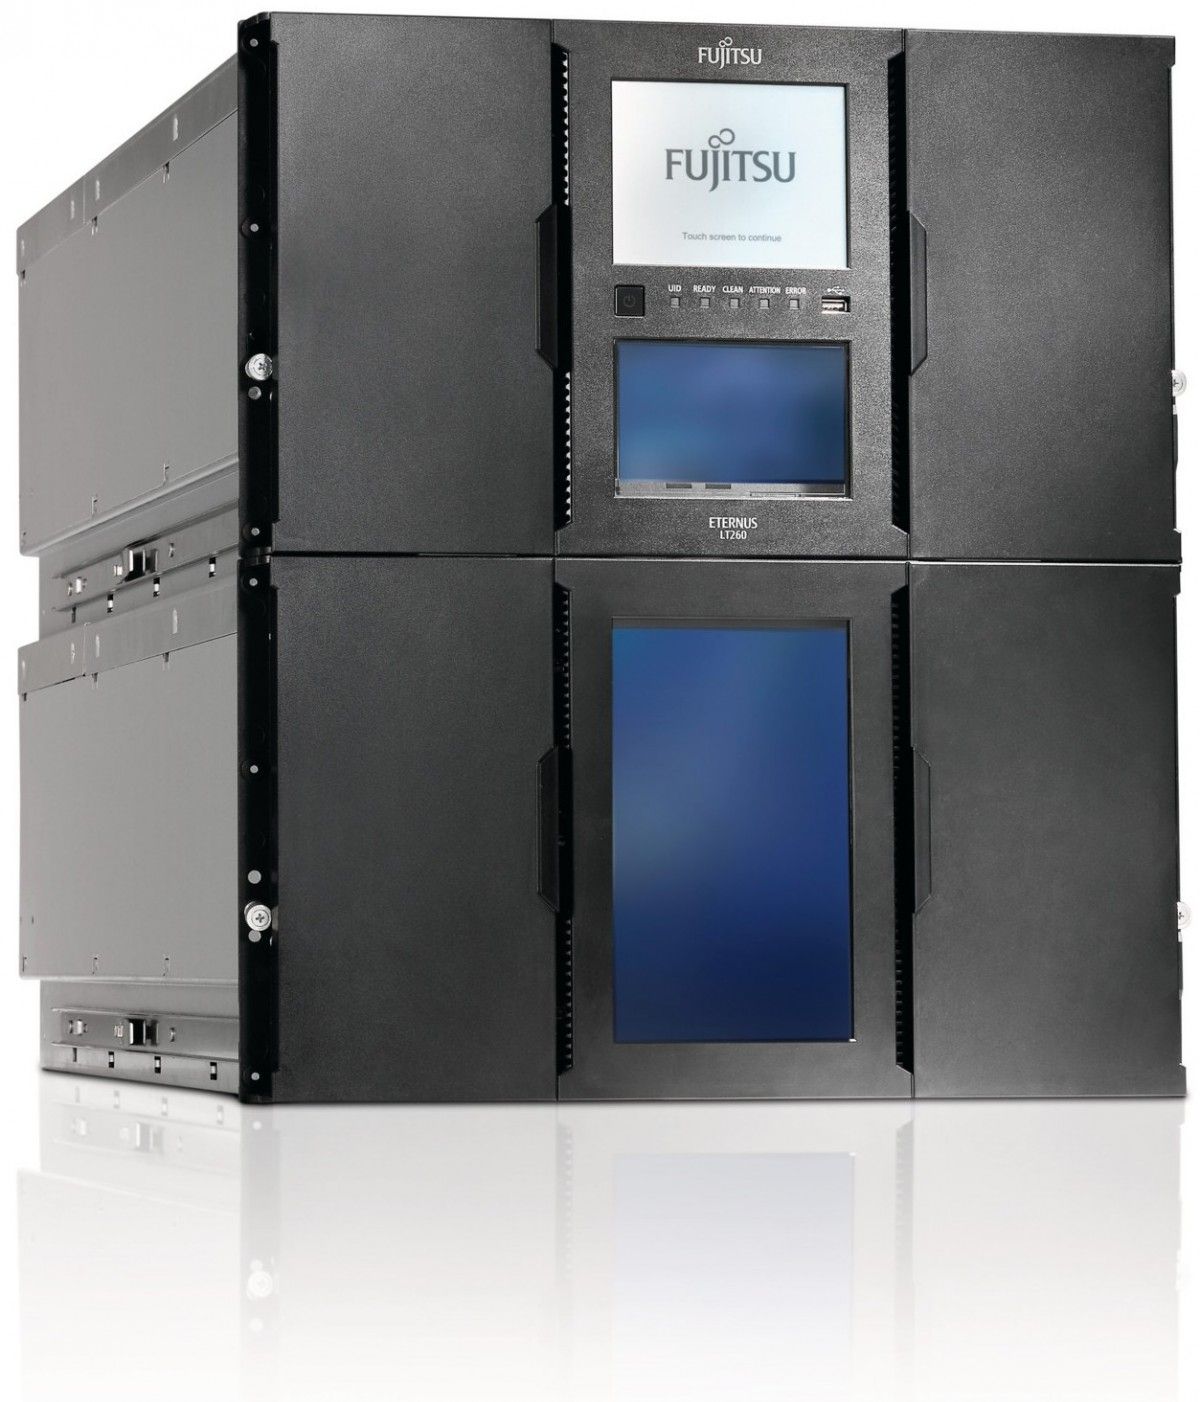 Fujitsu Fujitsu-ETERNUS-LT260